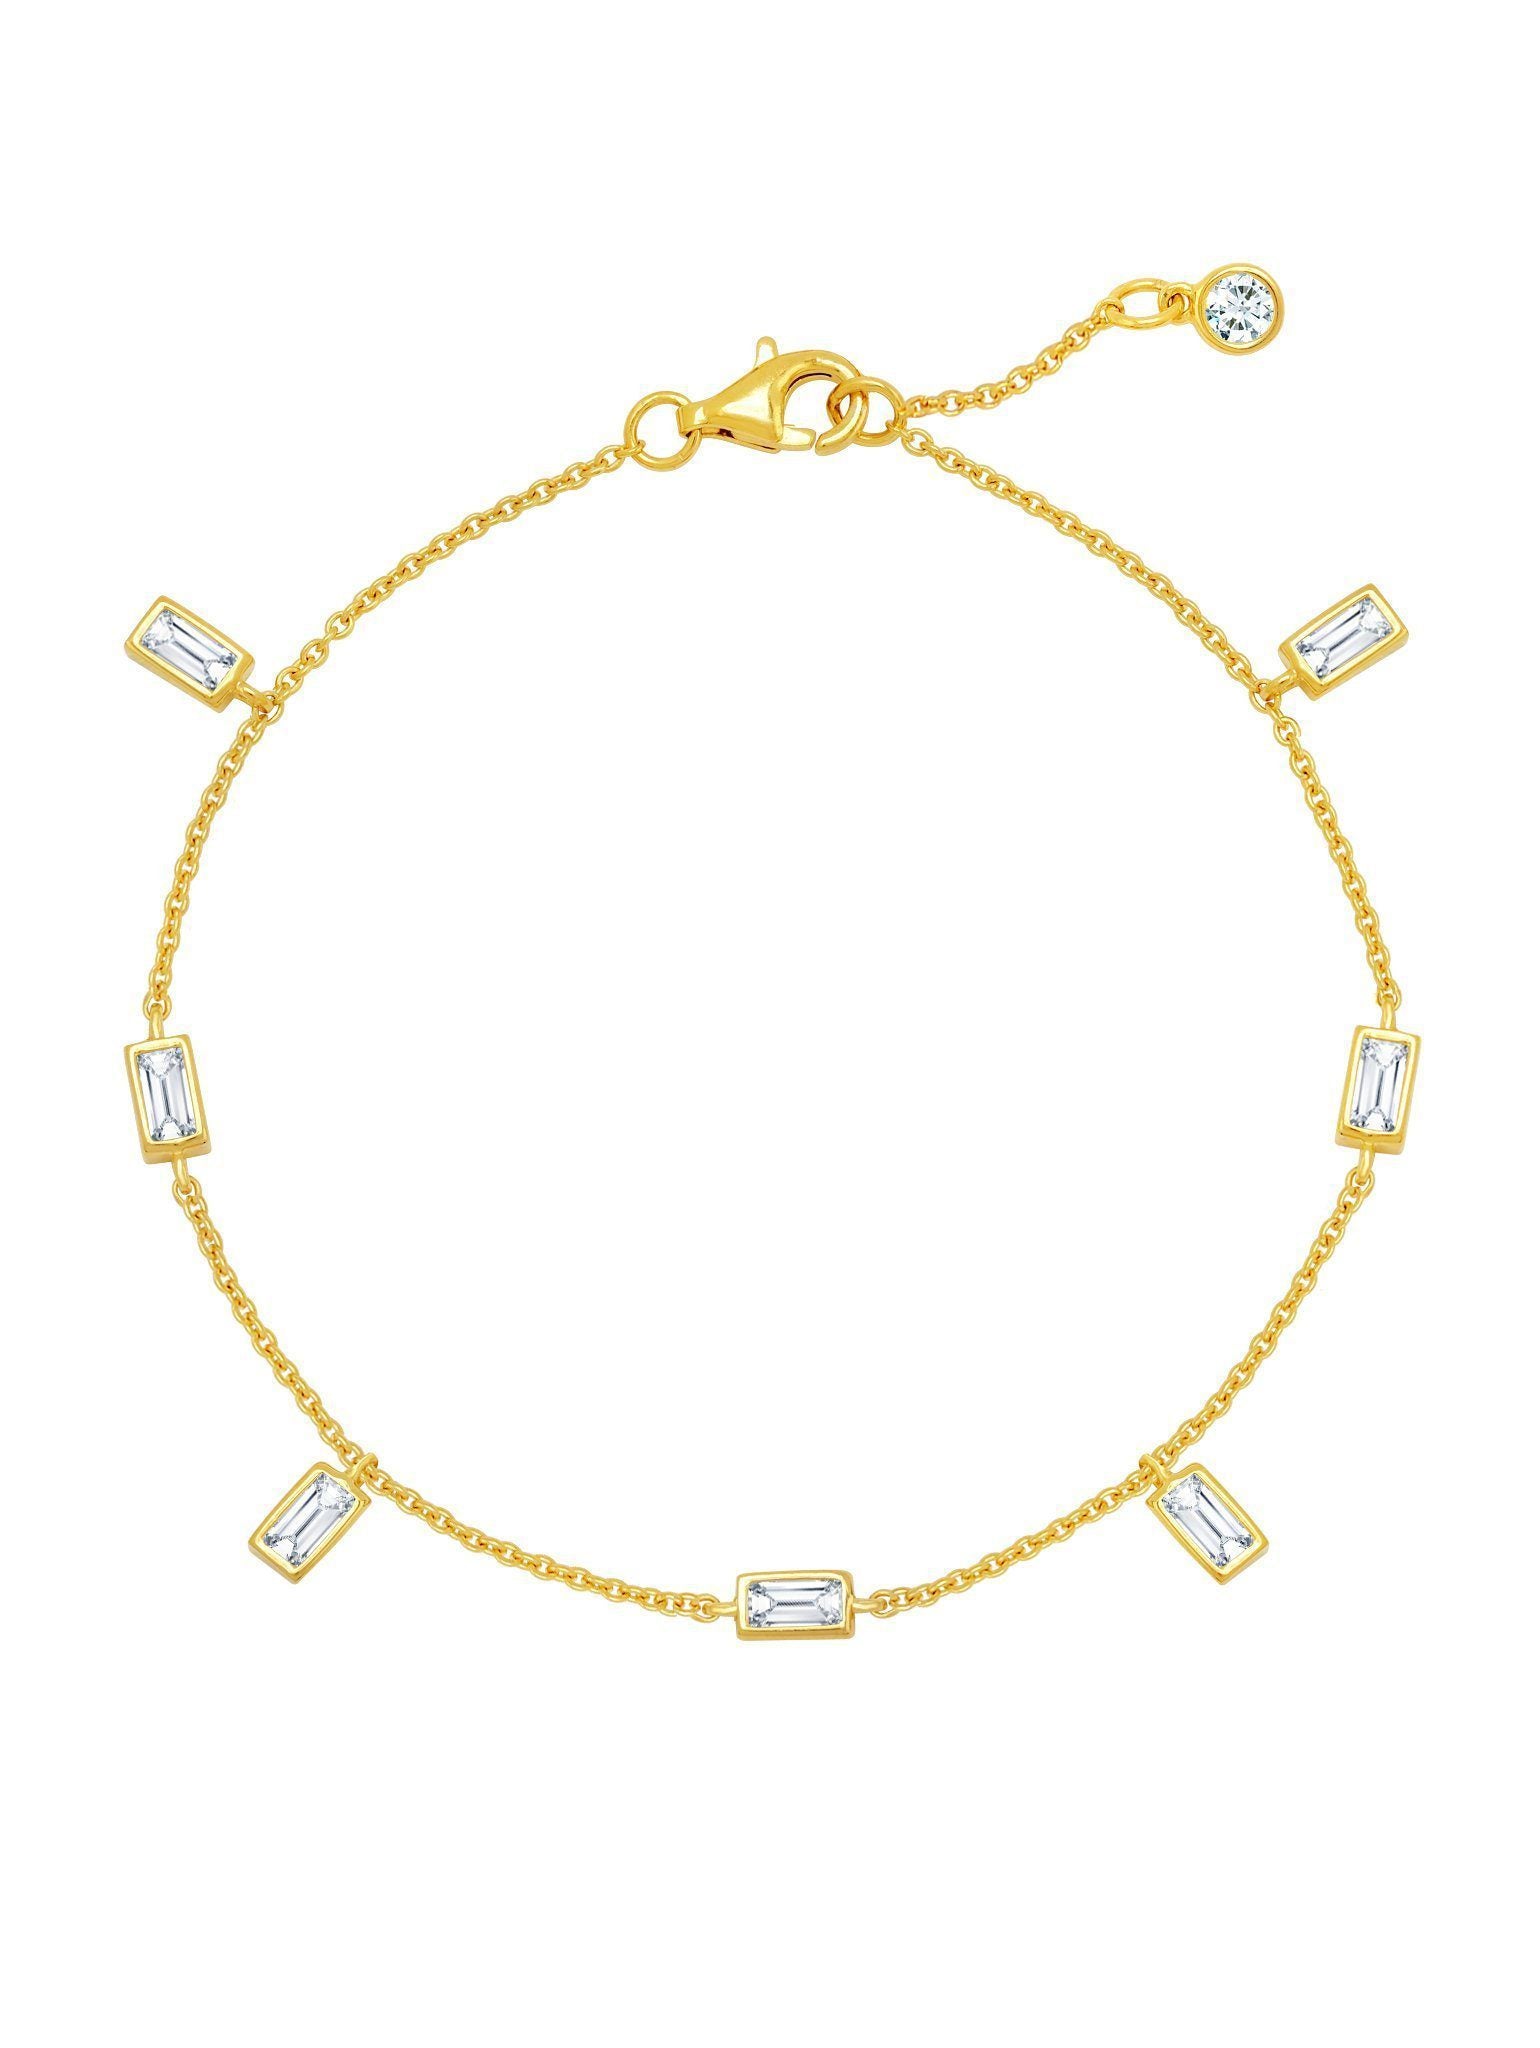 Crislu Jewelry Crislu Prism Baguette Bracelet finished in 18KT Gold